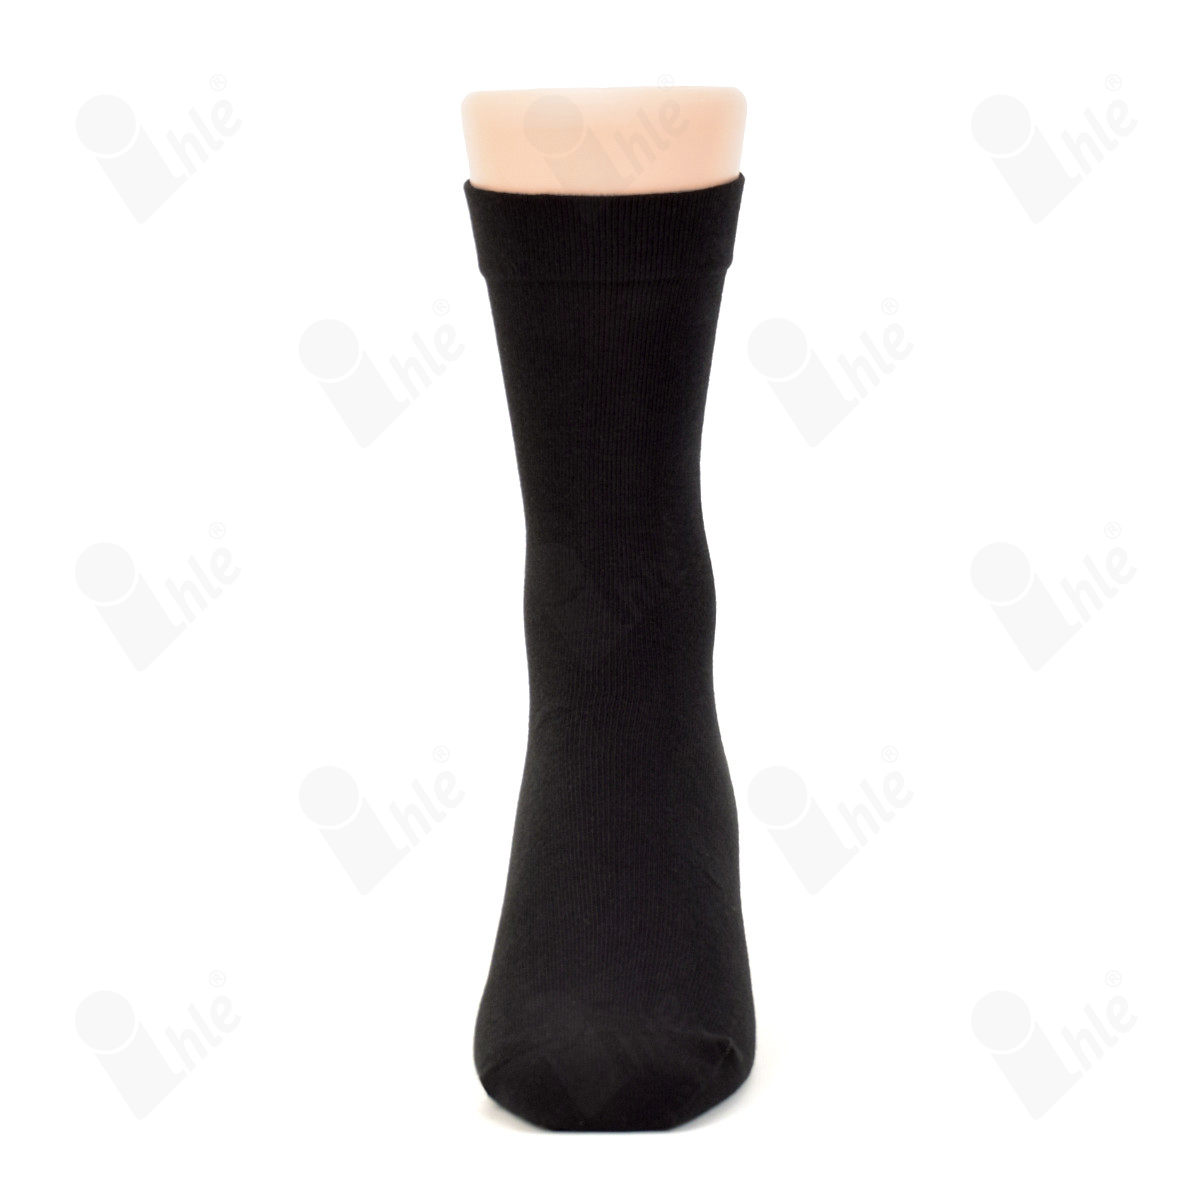 Ihle Socke klassisch schwarz Gr. 47-50